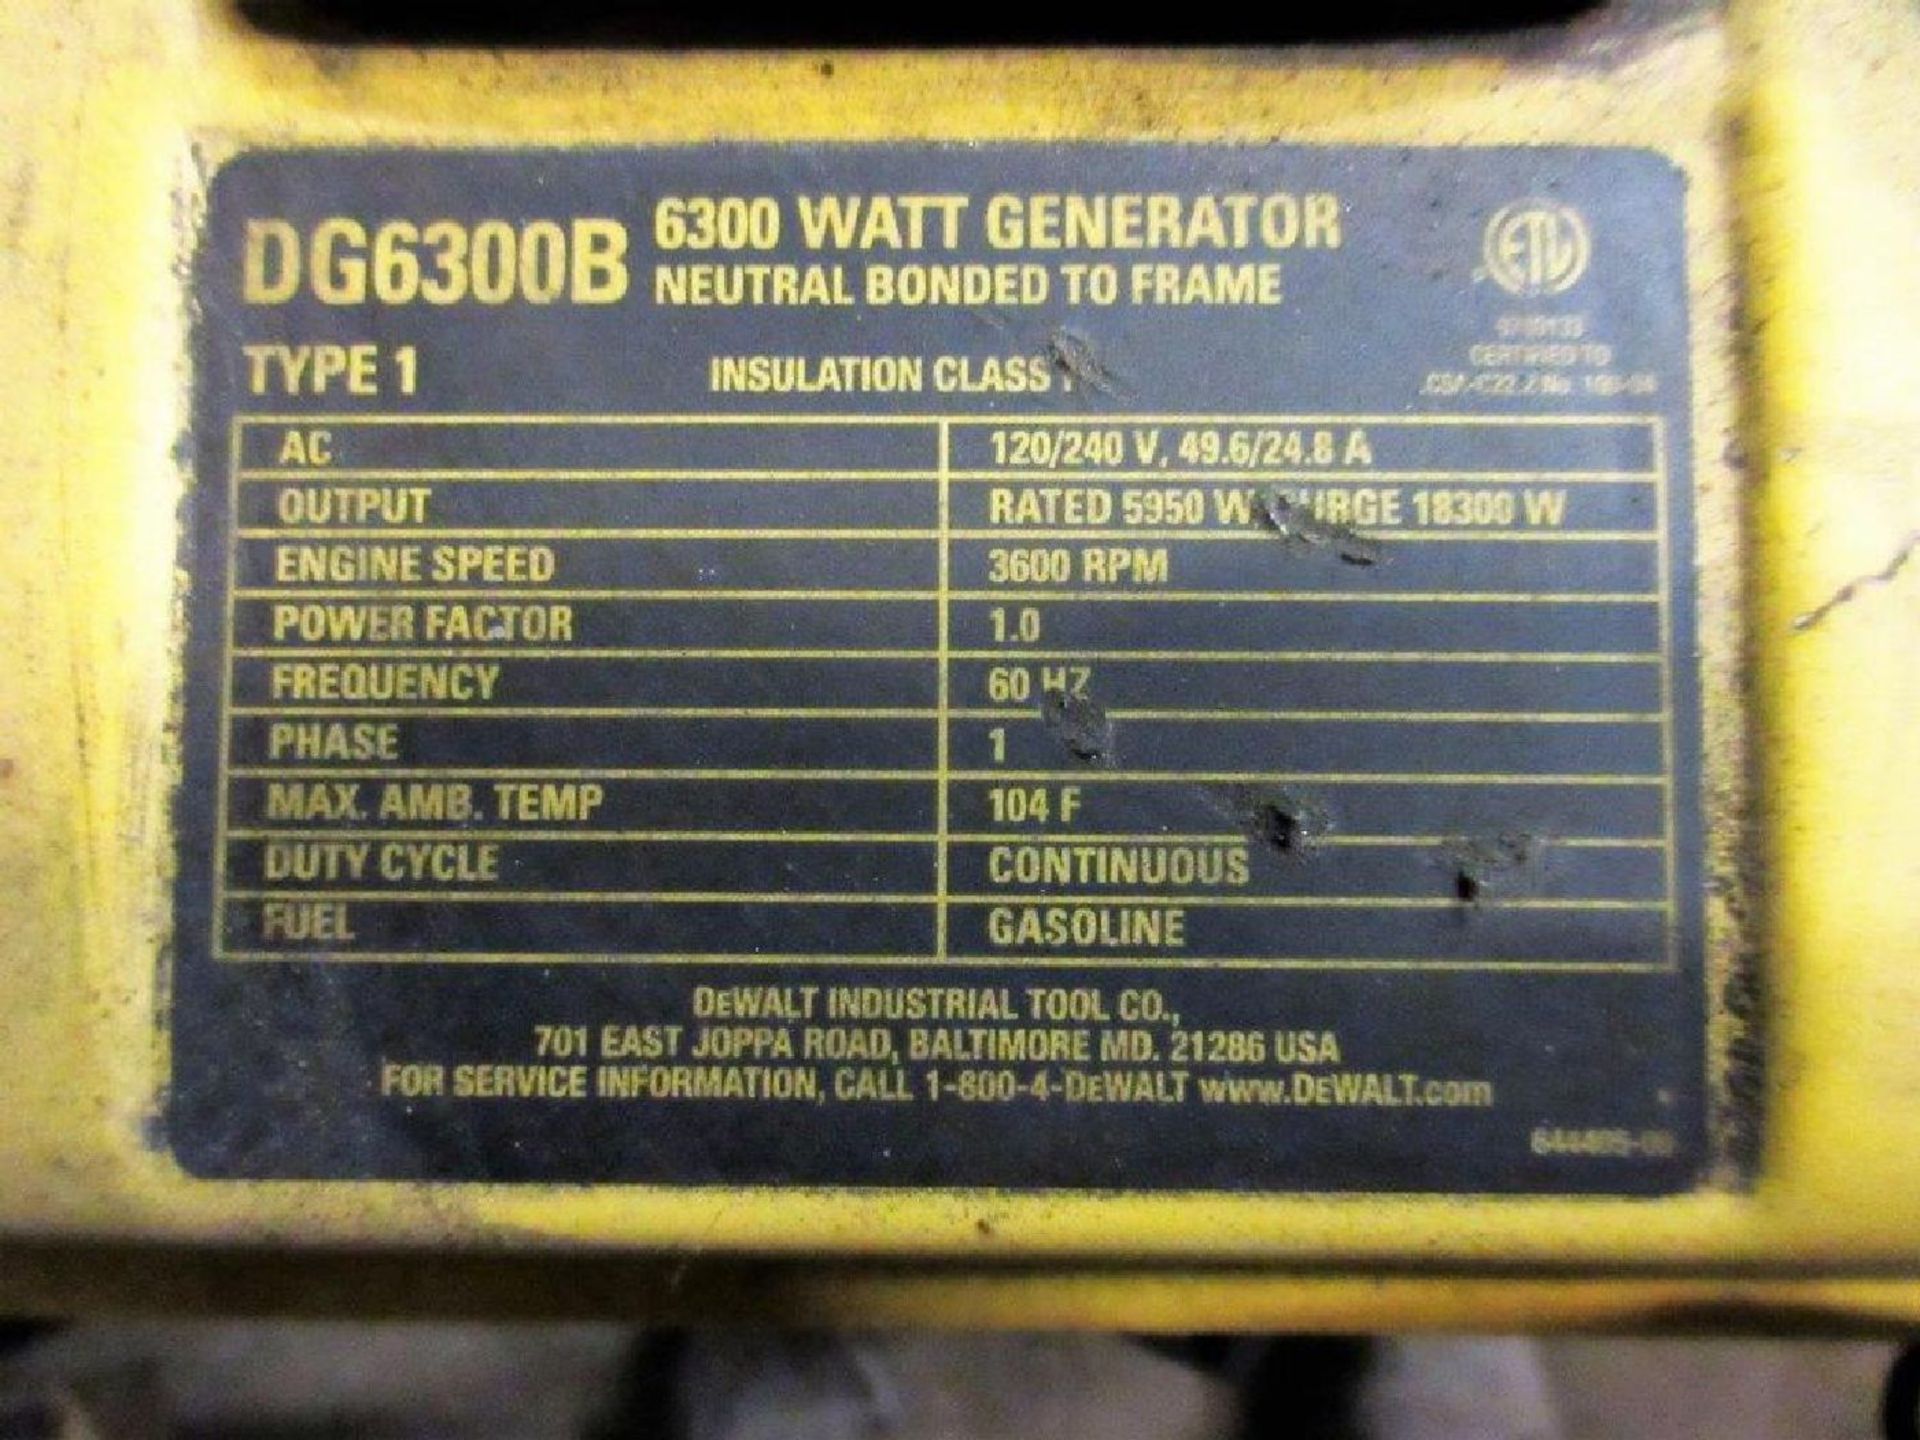 DeWalt Model DG6300B Portable 6300 Watt Gas Generator - Image 3 of 3